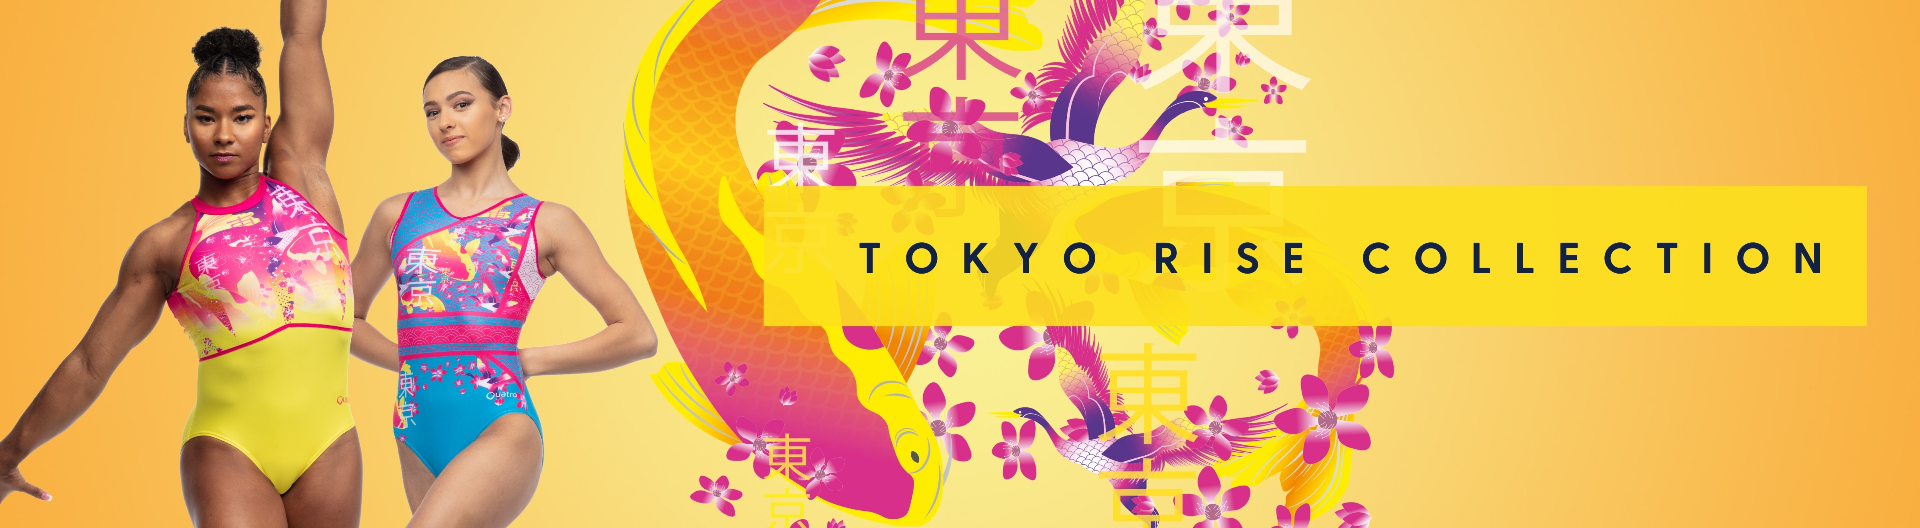 Tokyo-Rise-Website-Banner_5_